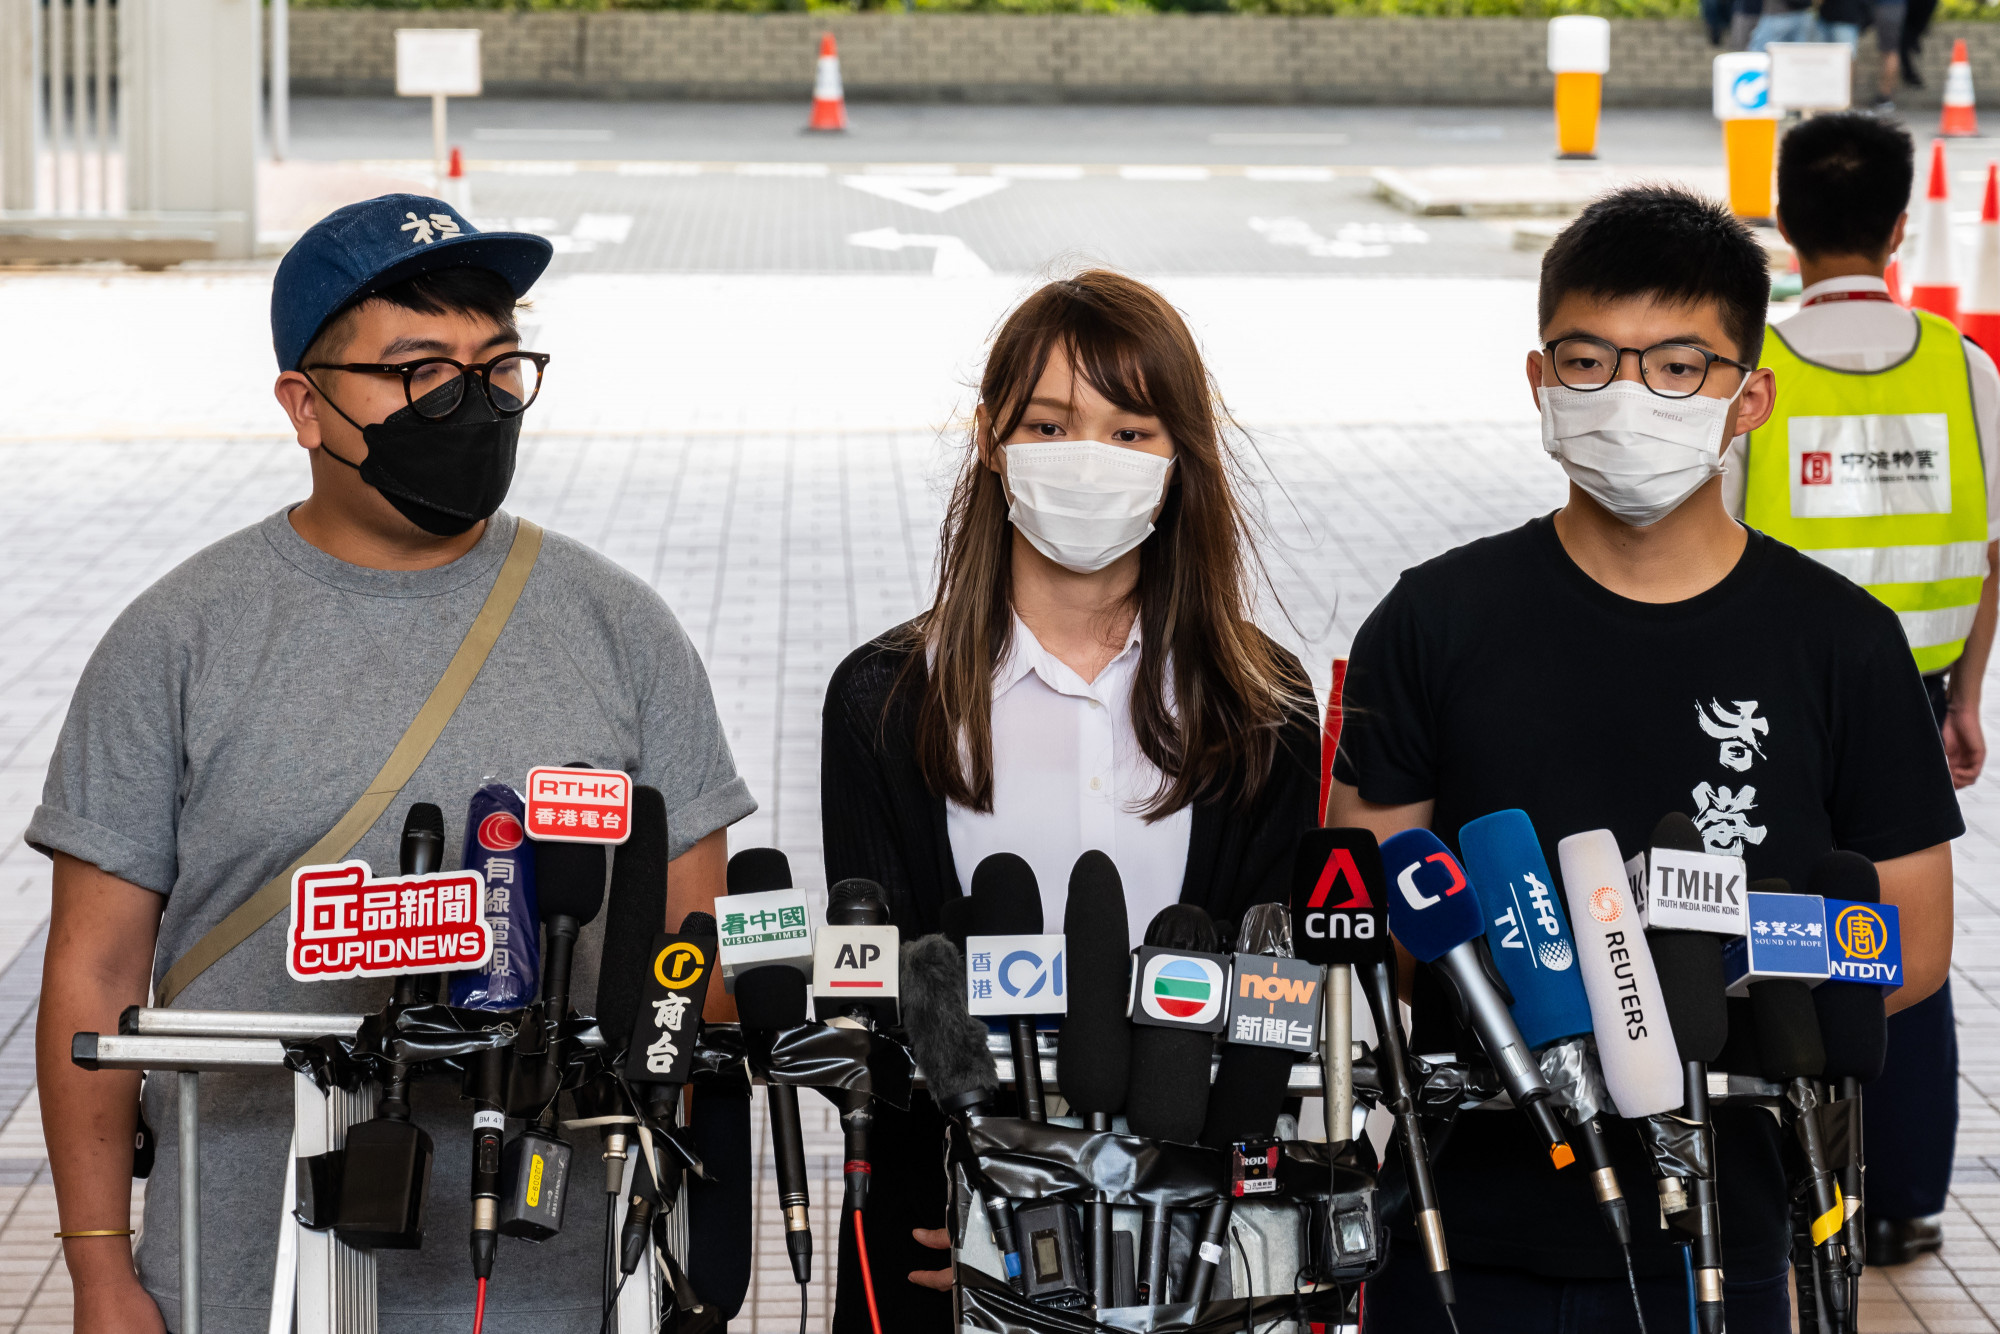 Hong Kong Health Workers, Activists Urge Boycott of Mass Testing